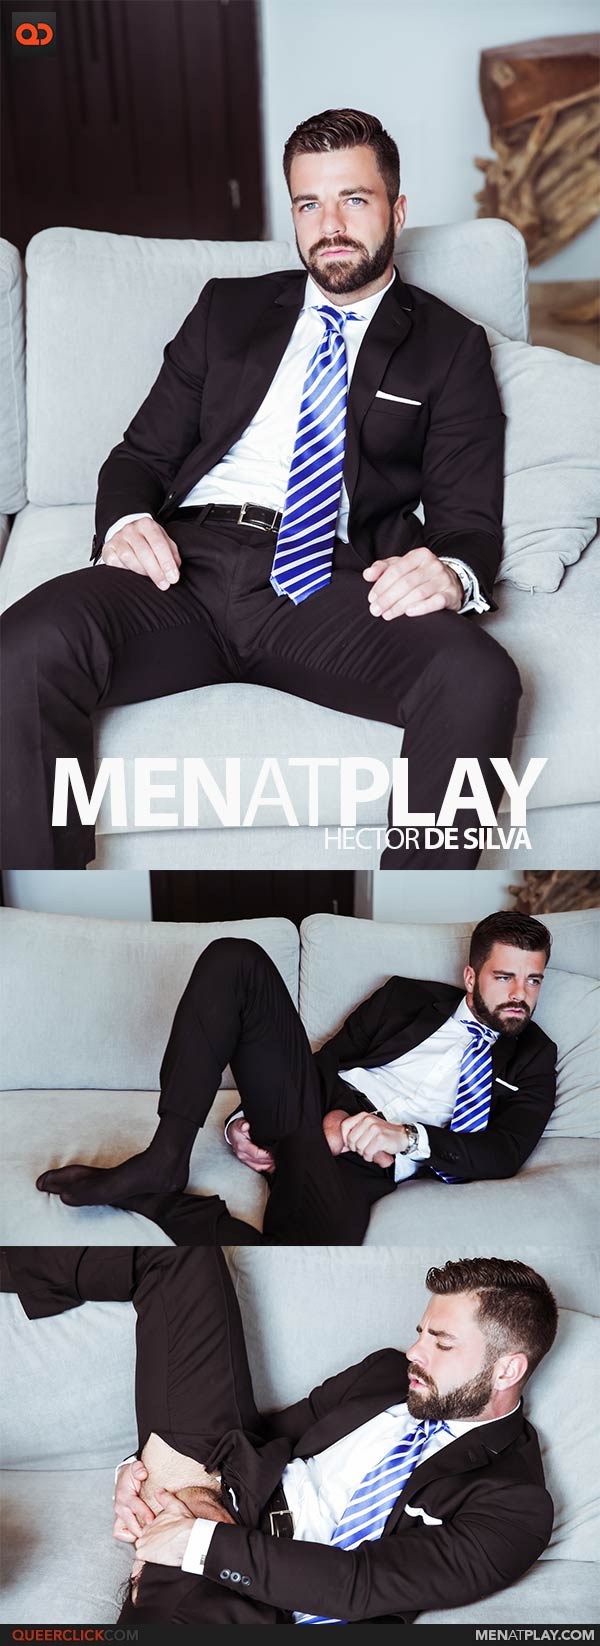 MenAtPlay: Hector De Silva - Focus, Editor's Cut